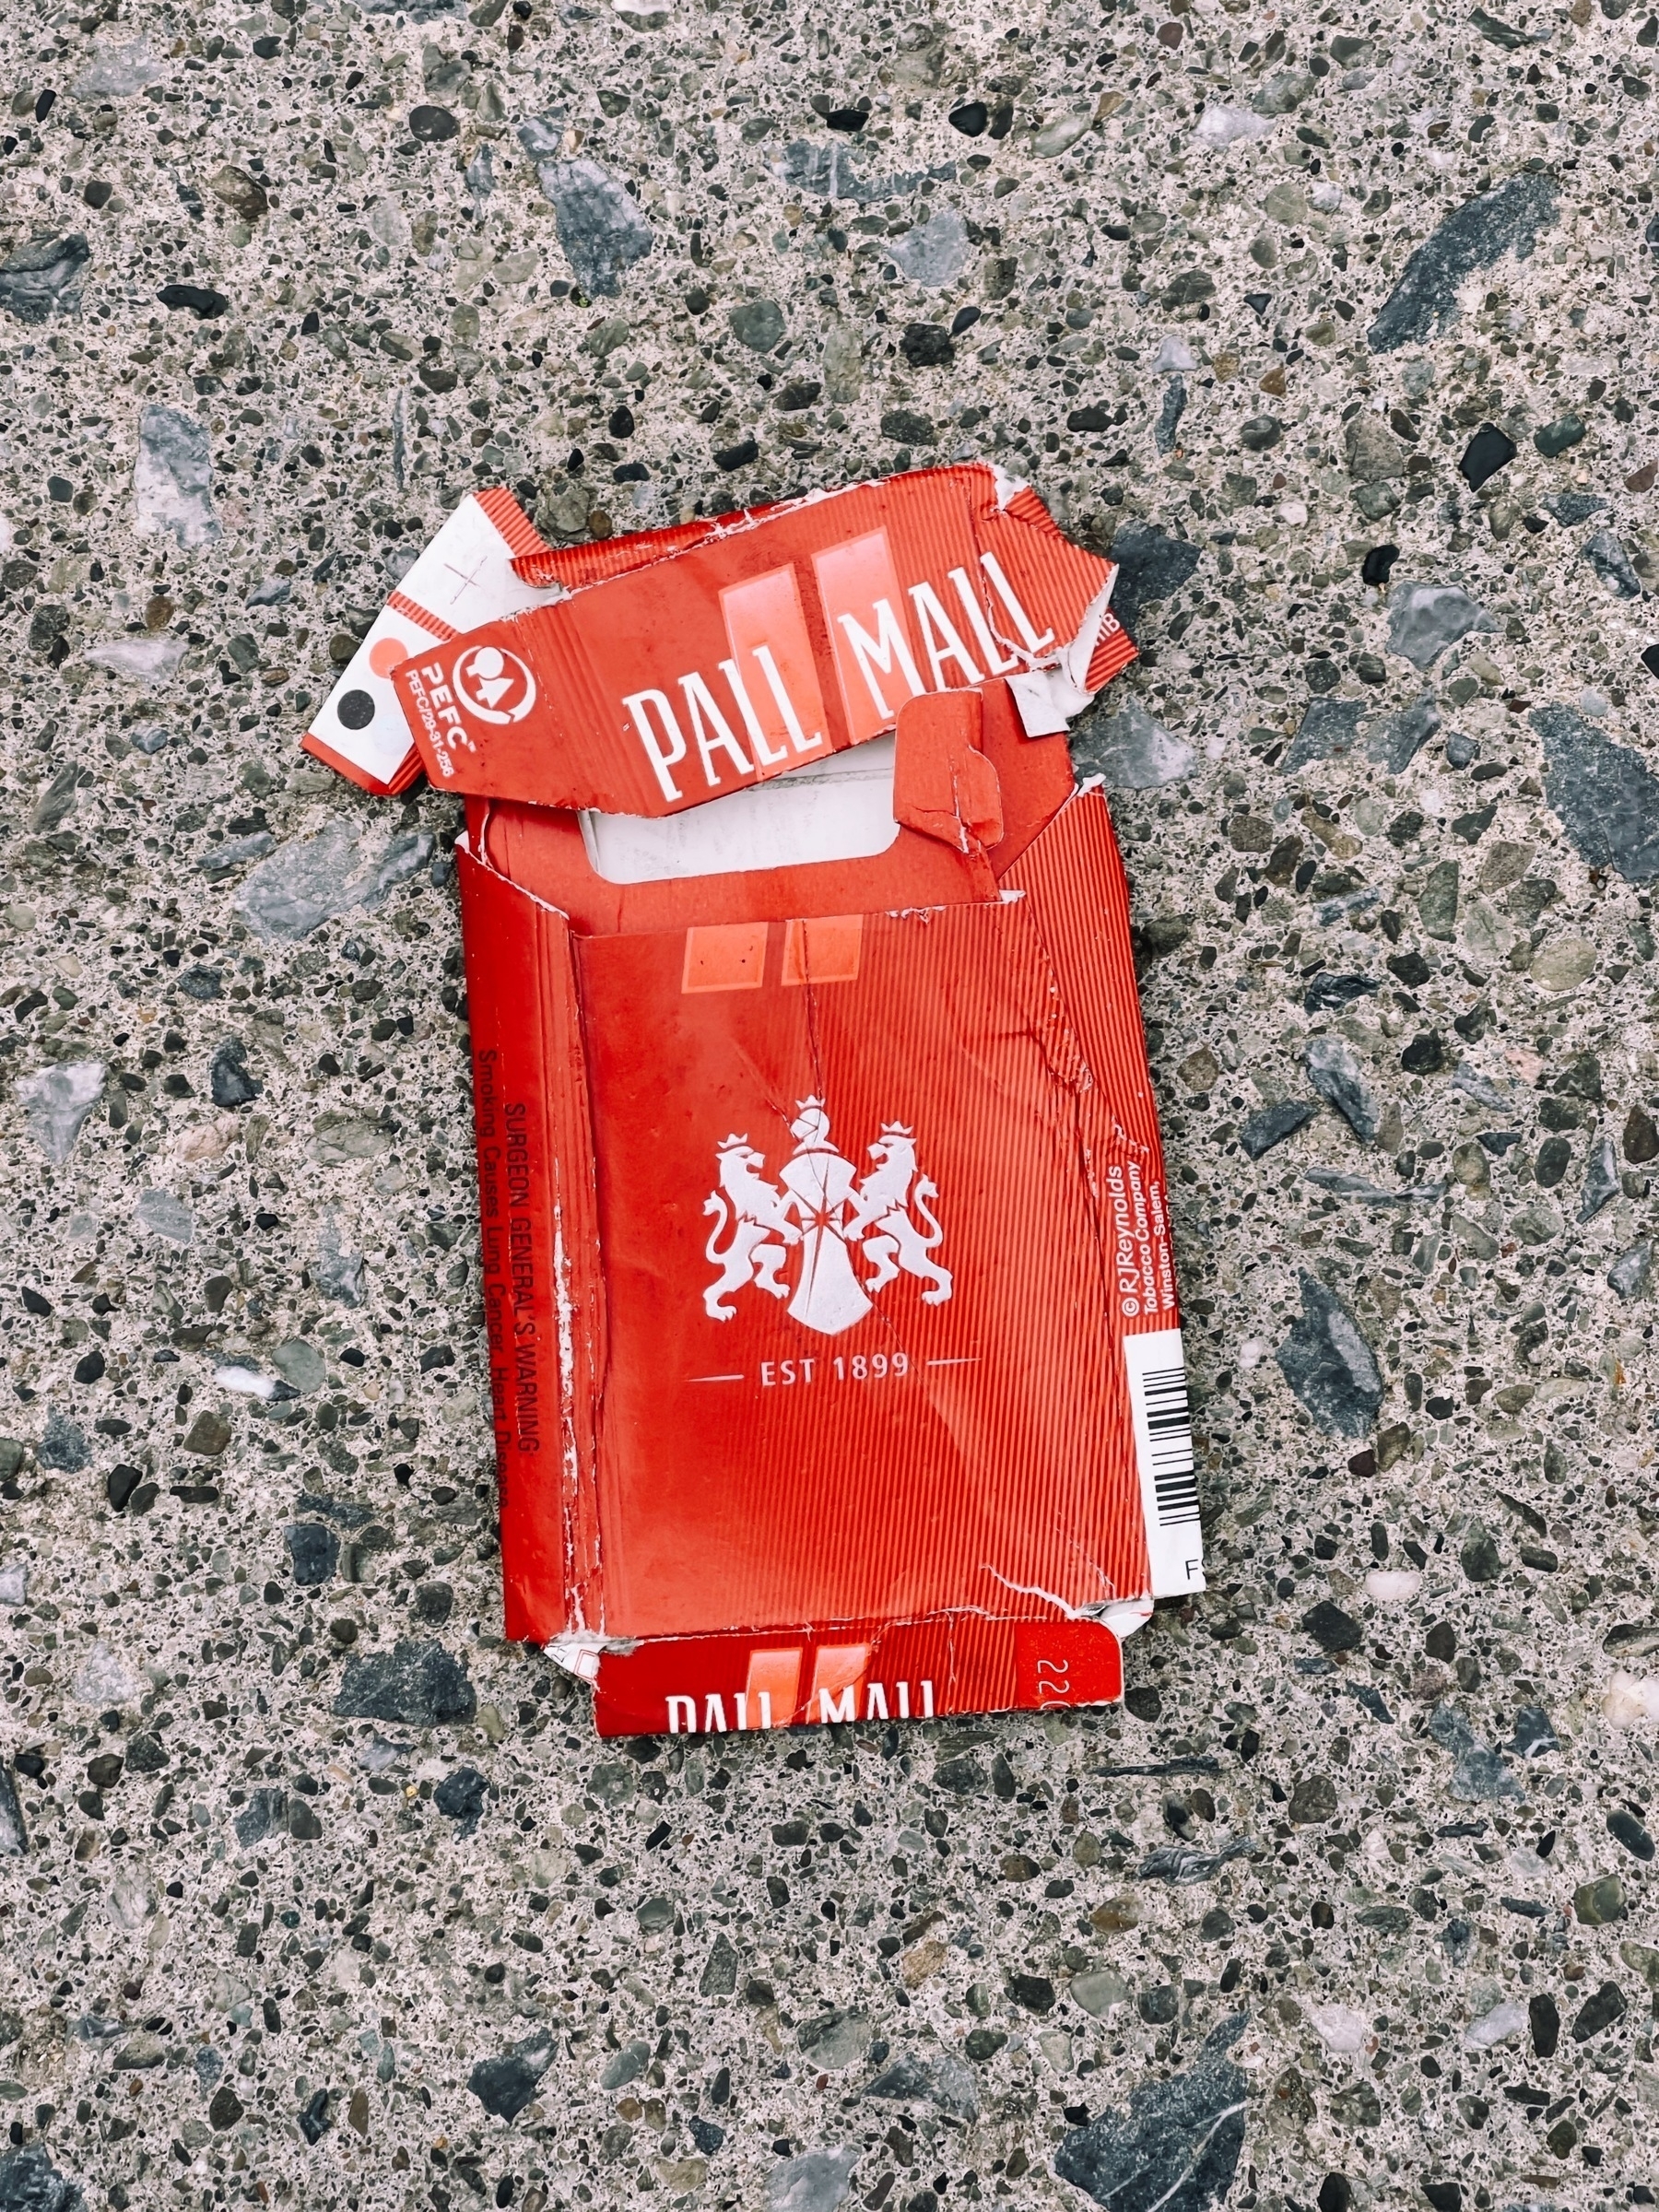 Orange-red Pall Mall cigarette packaging on concrete sidewalk.